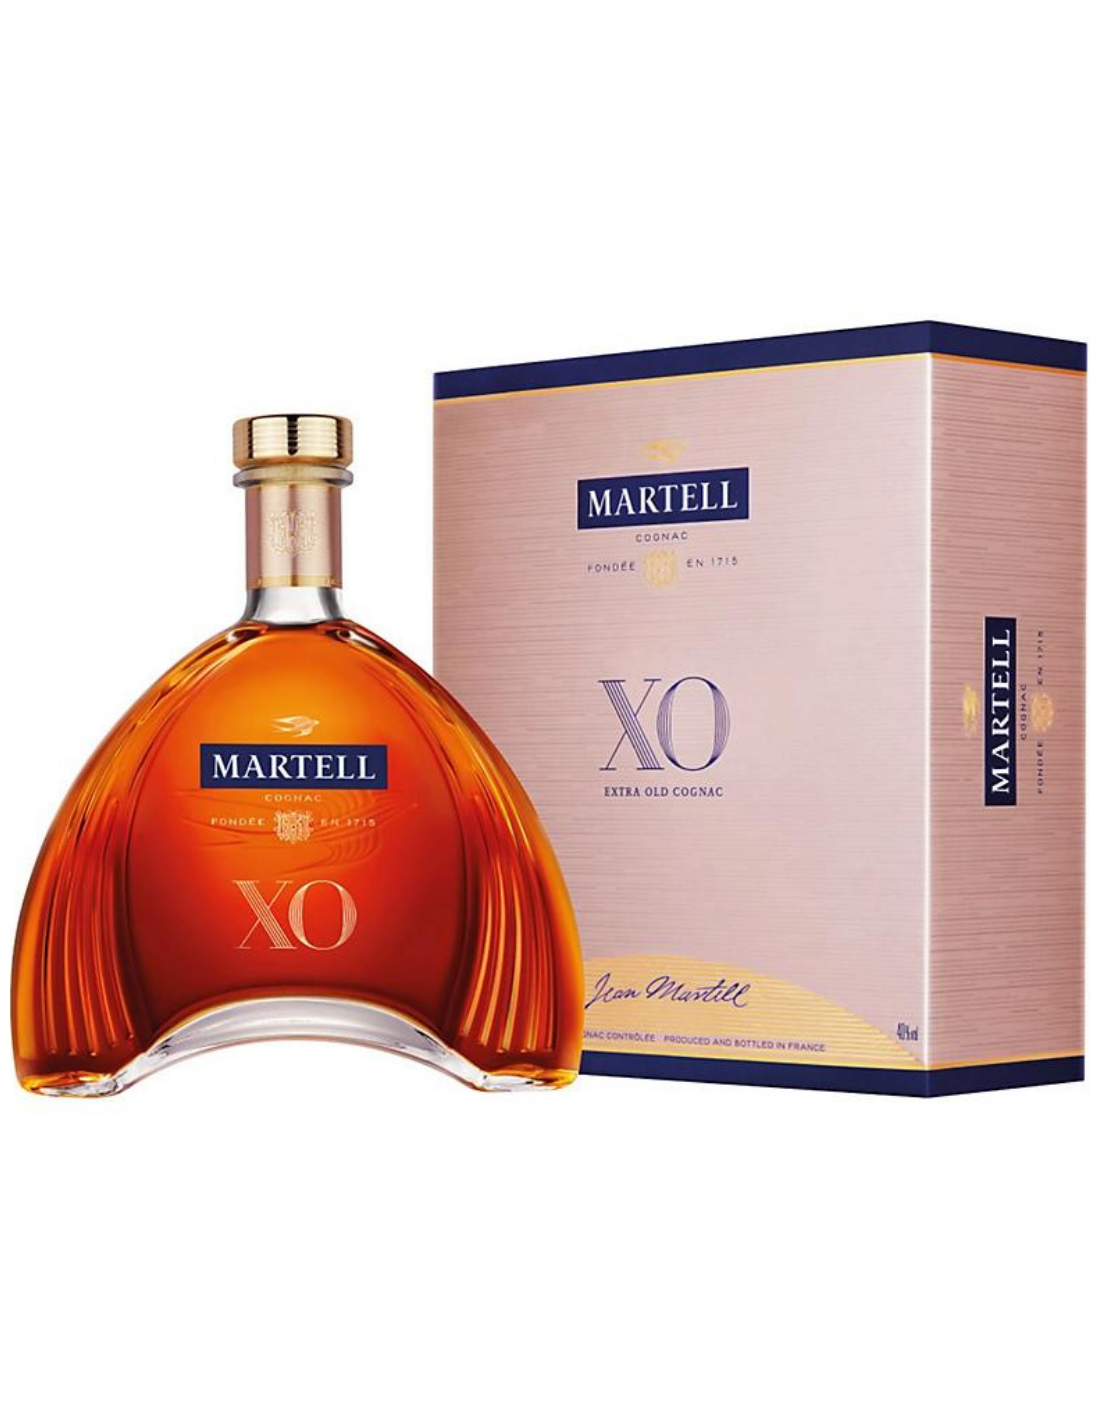 Coniac Martell XO, 40% alc., 0.7L, Franta alcooldiscount.ro